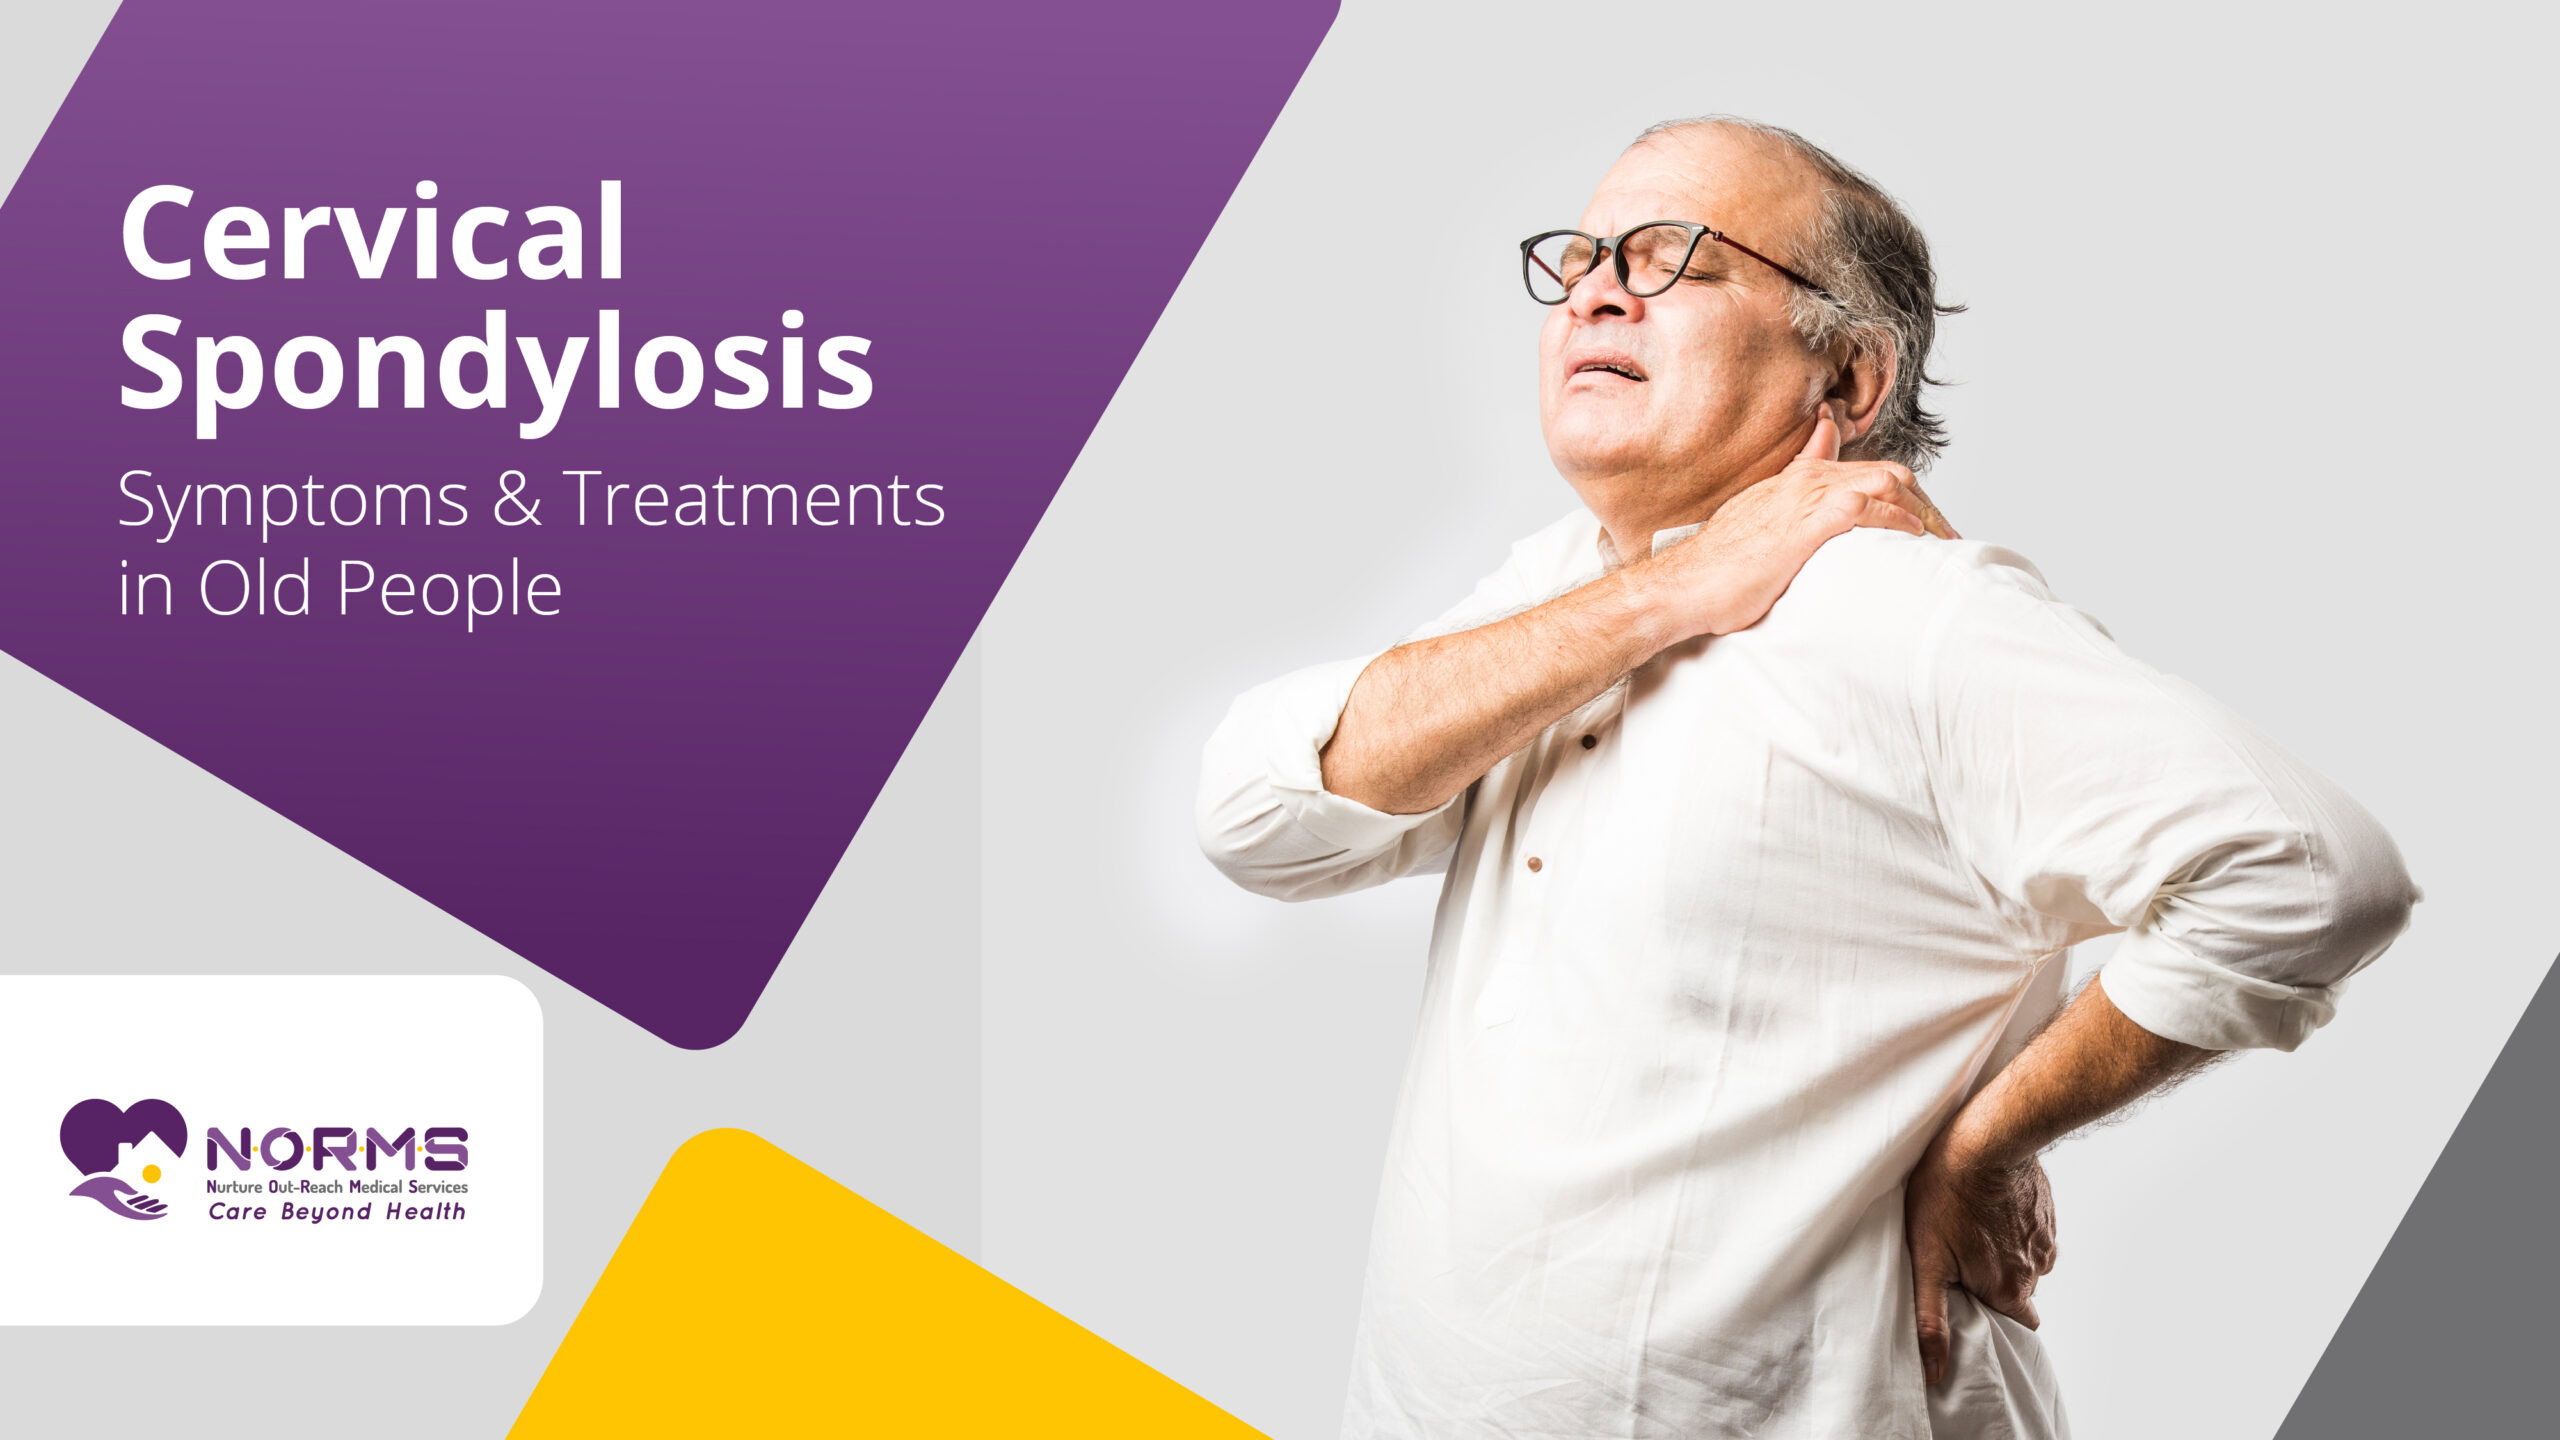 Cervical spondylosis symptoms and treatments in older people